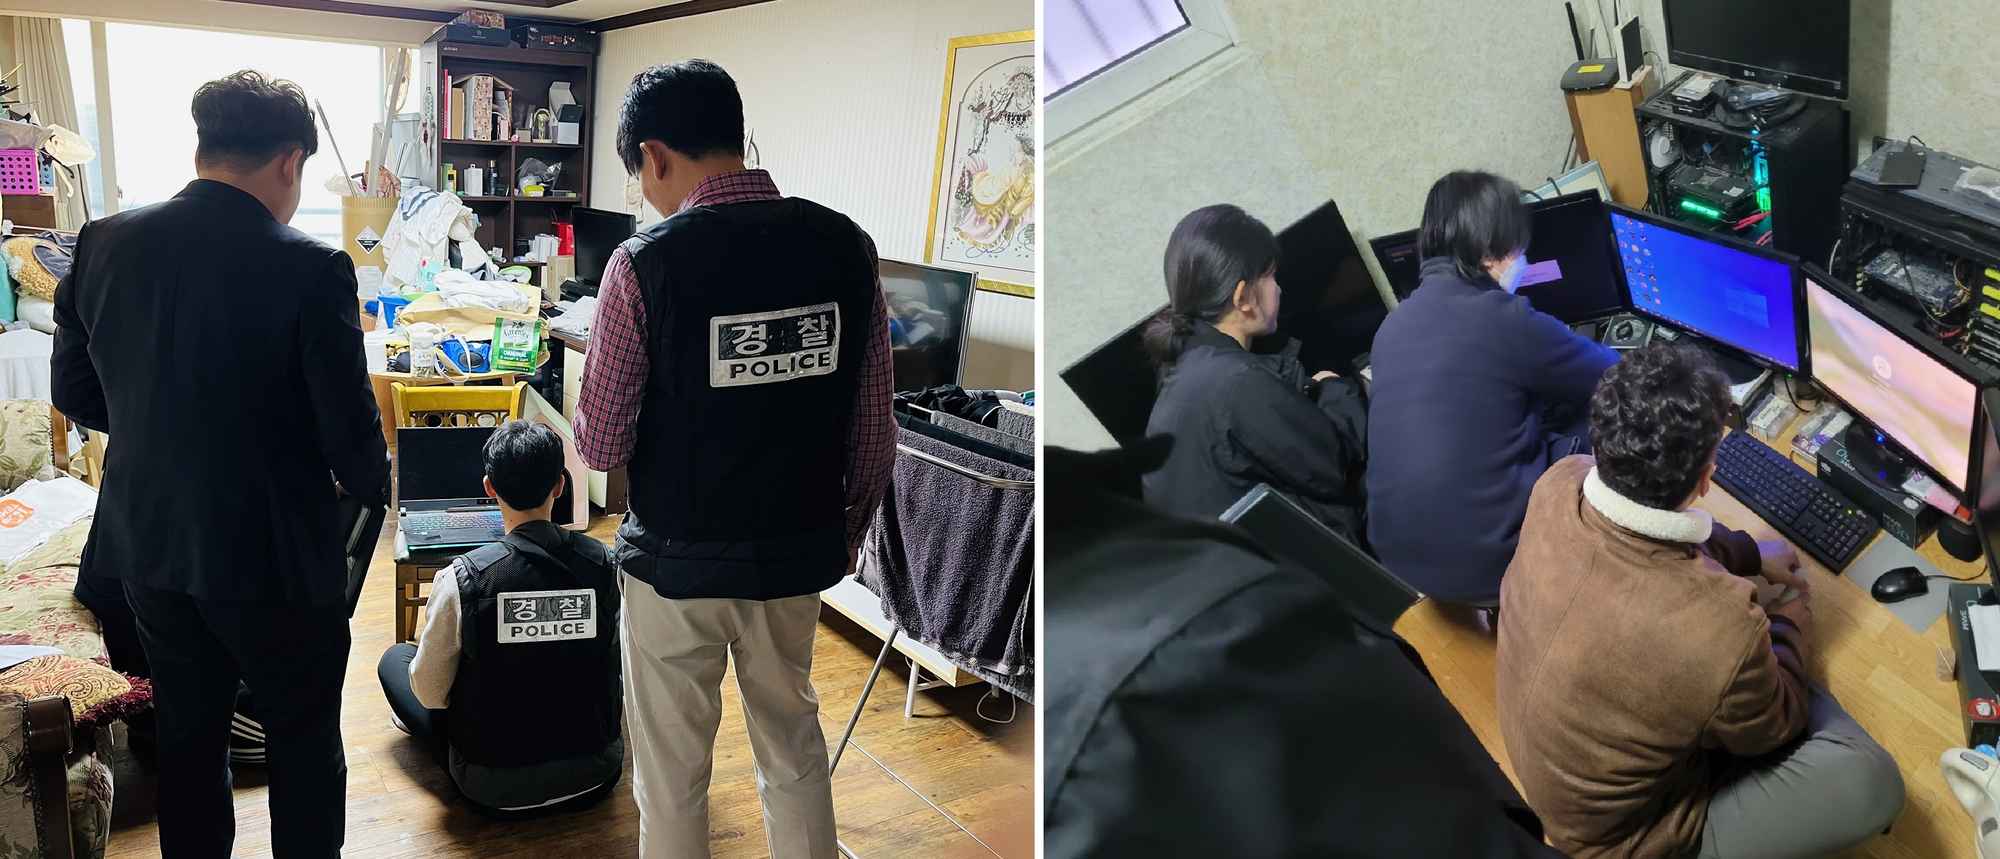 korean police raiding a person's home and checking their electronics